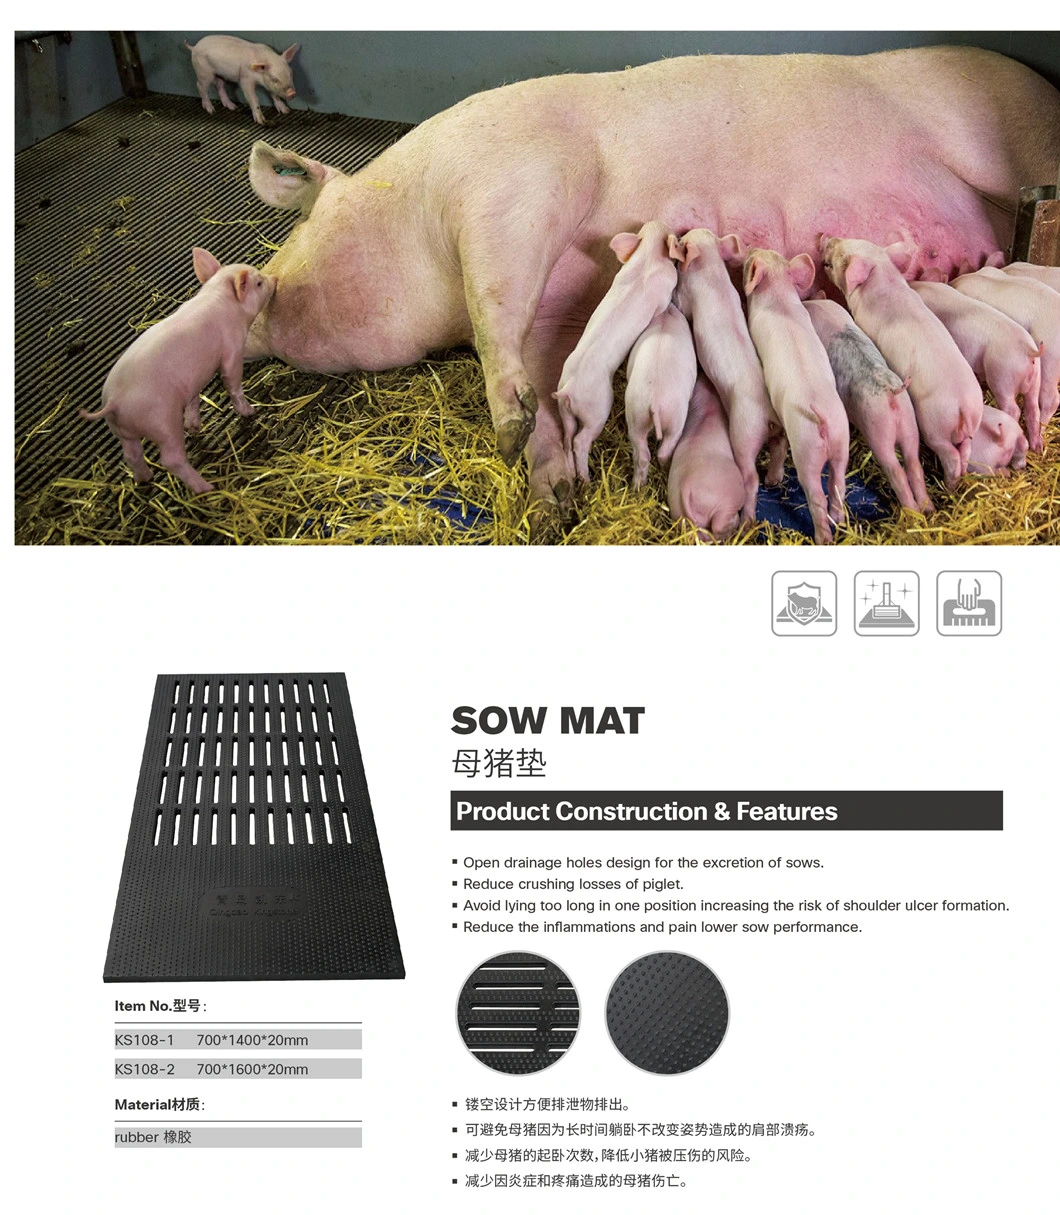 Fiber Reinforced Wean Farrowing Rearing Warm Pig Sow Rubber Mat